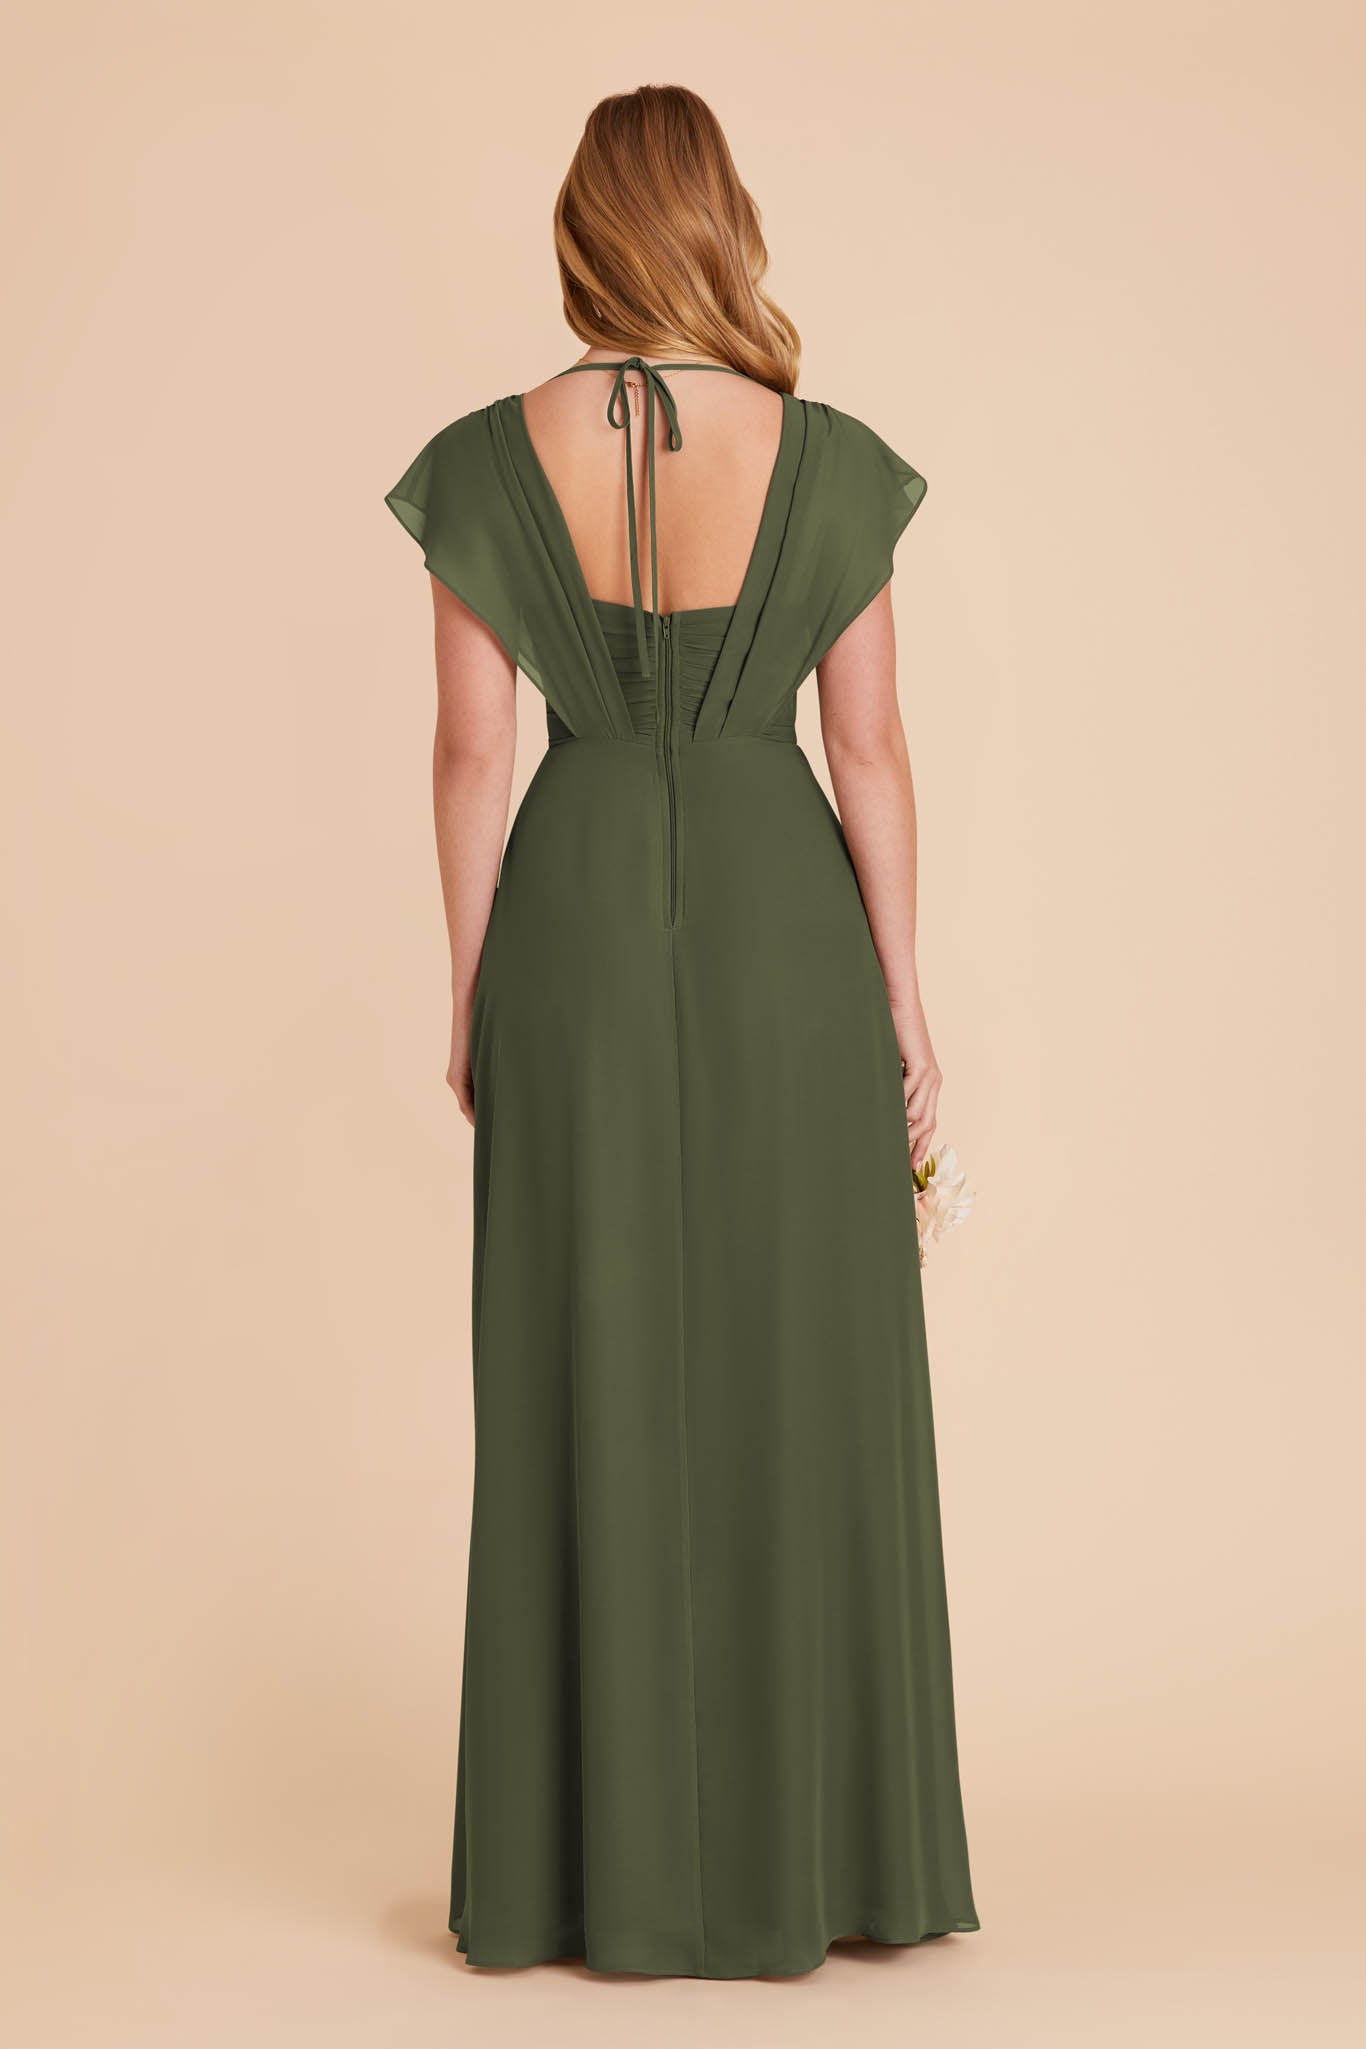 Olive Violet Chiffon Dress by Birdy Grey